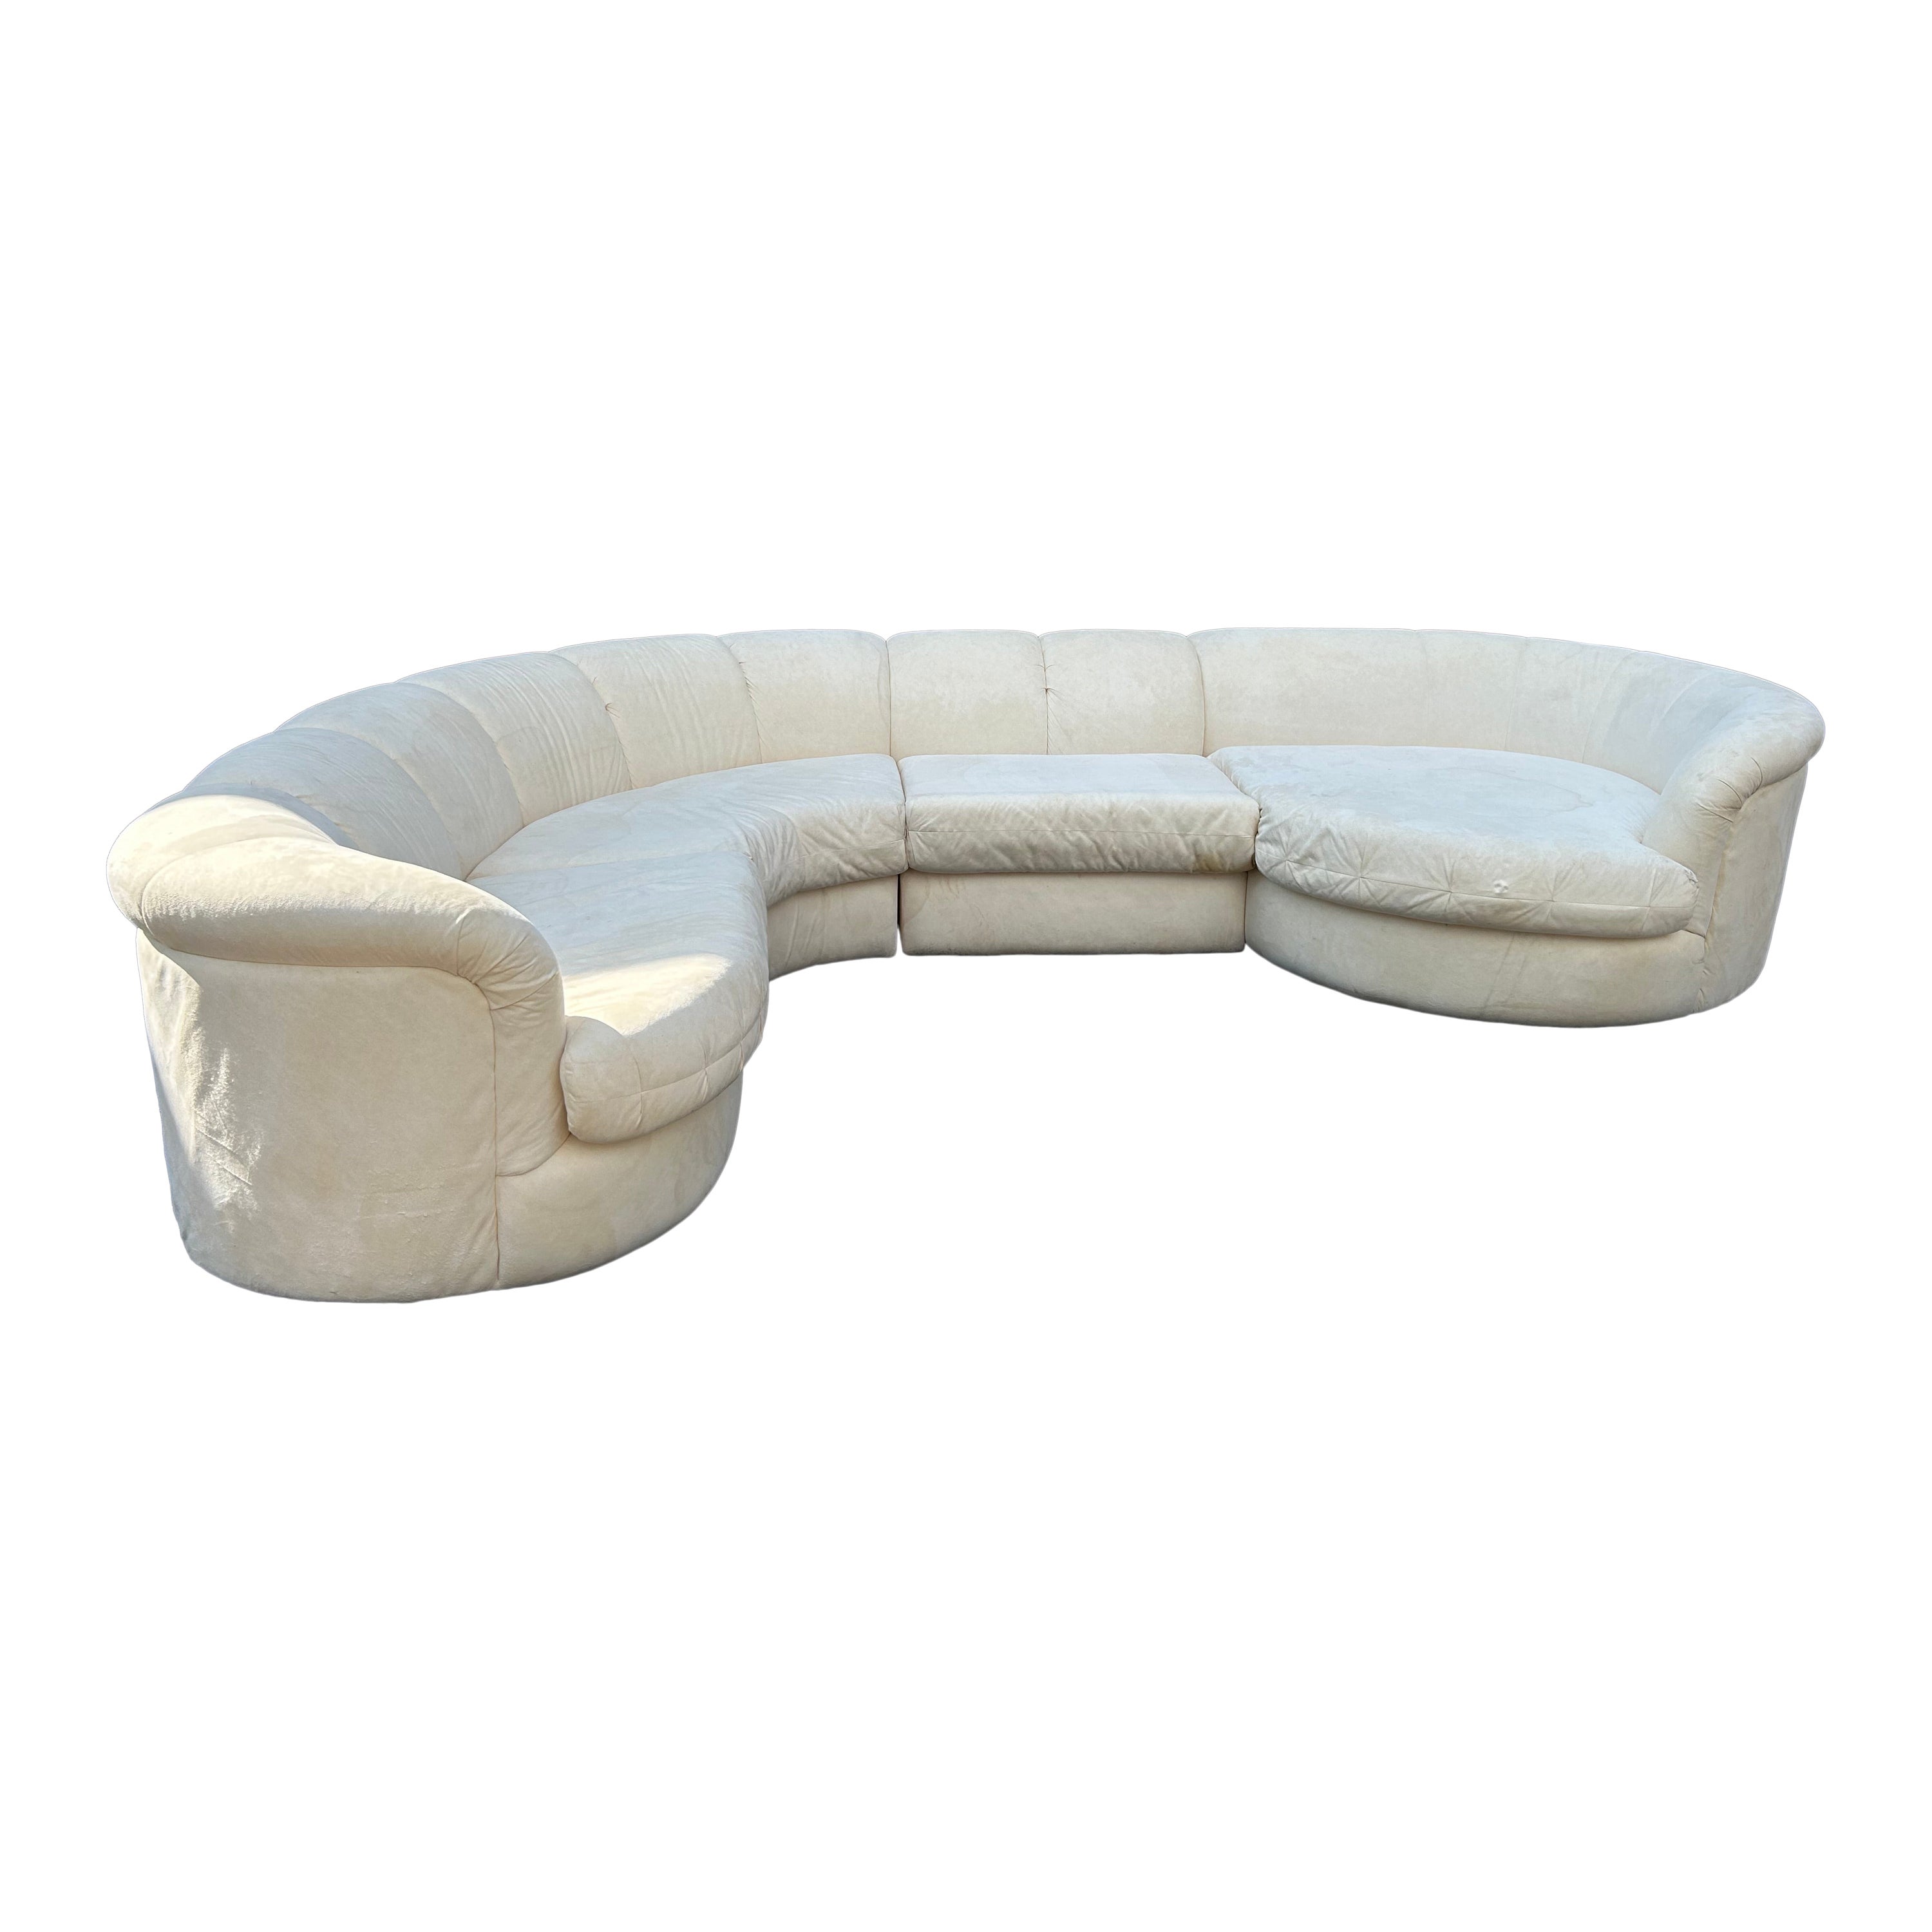 Fabelhafte 4teilige geschwungene Sofa-Sektion im Milo Baughman-Stil, Carsons-Stil, Mid-Century